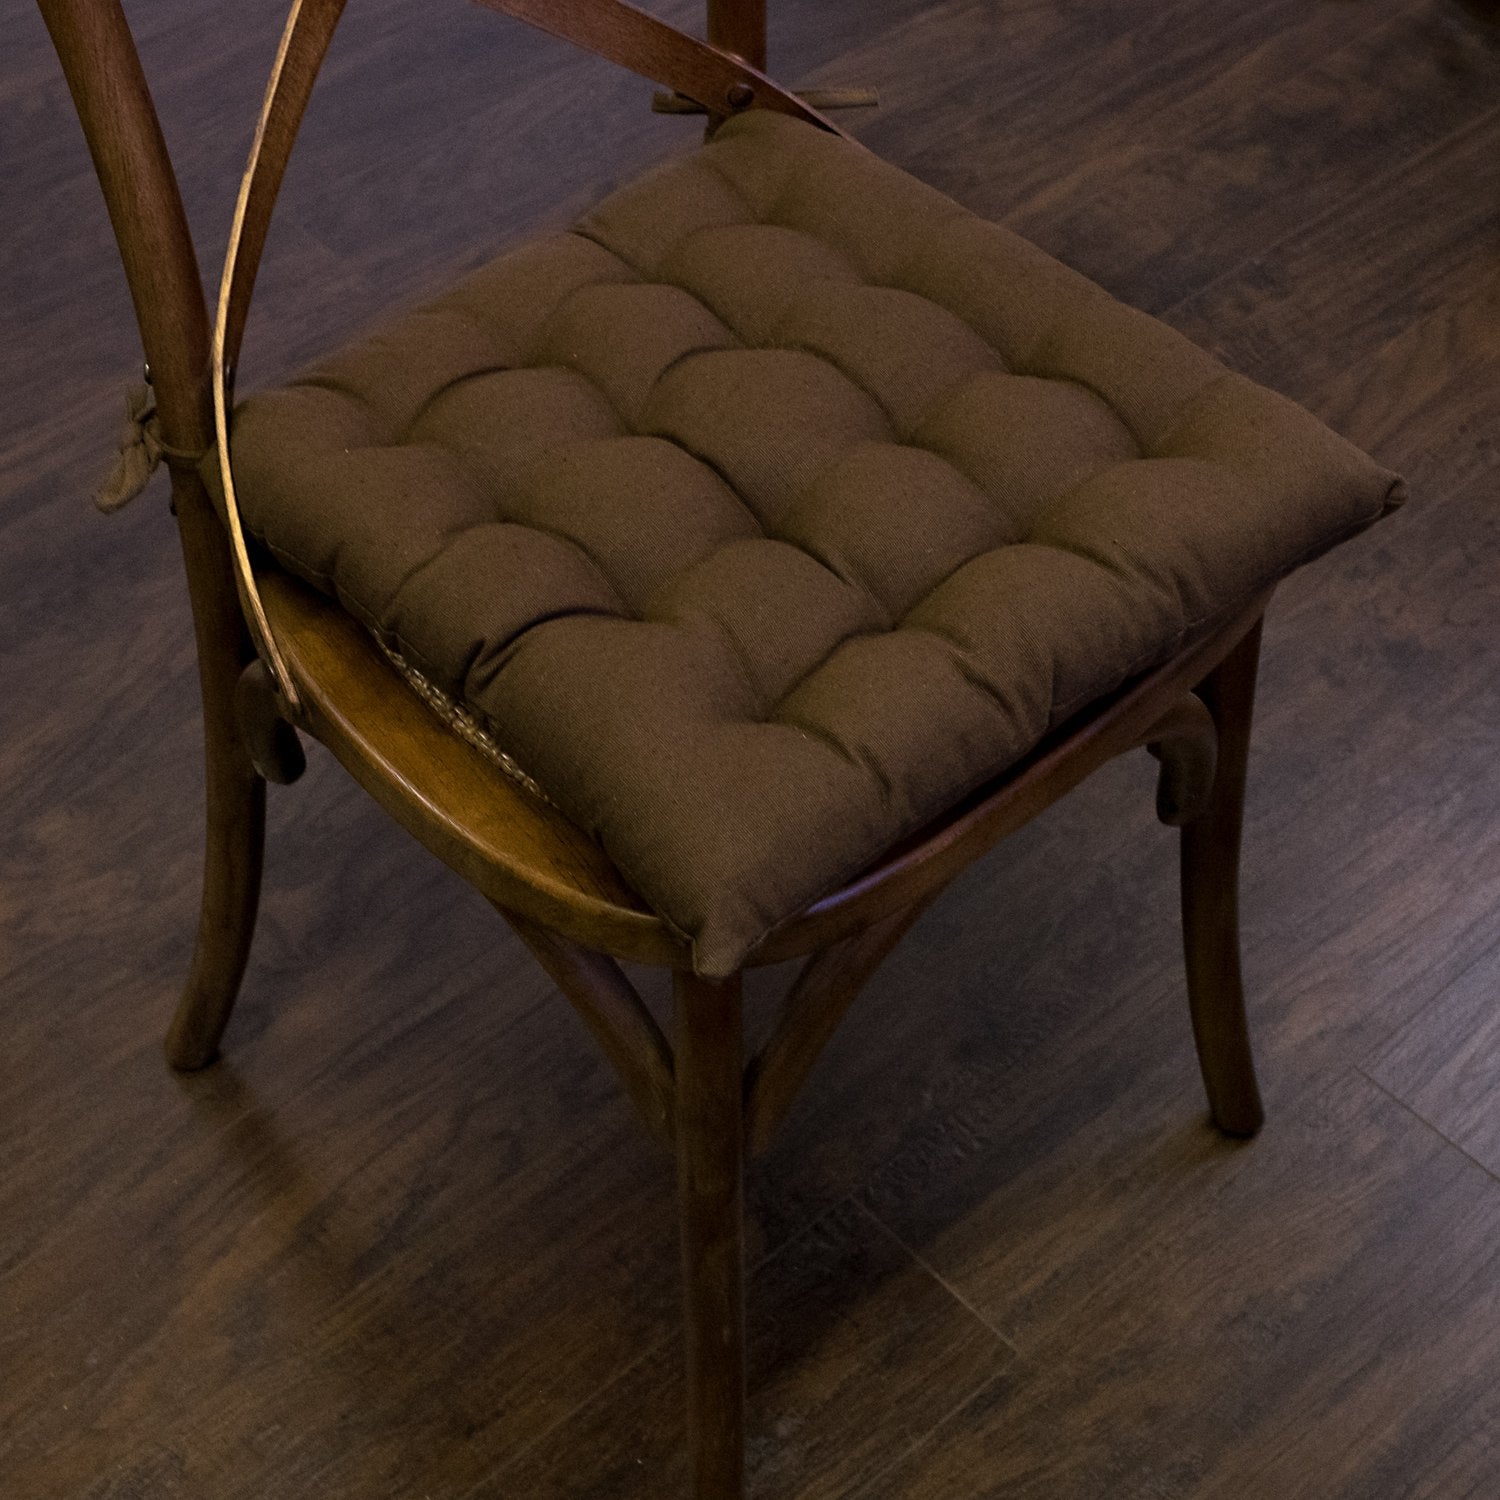 Tufted Chair Cushion Set 16 By 16 Chocolate - Chair